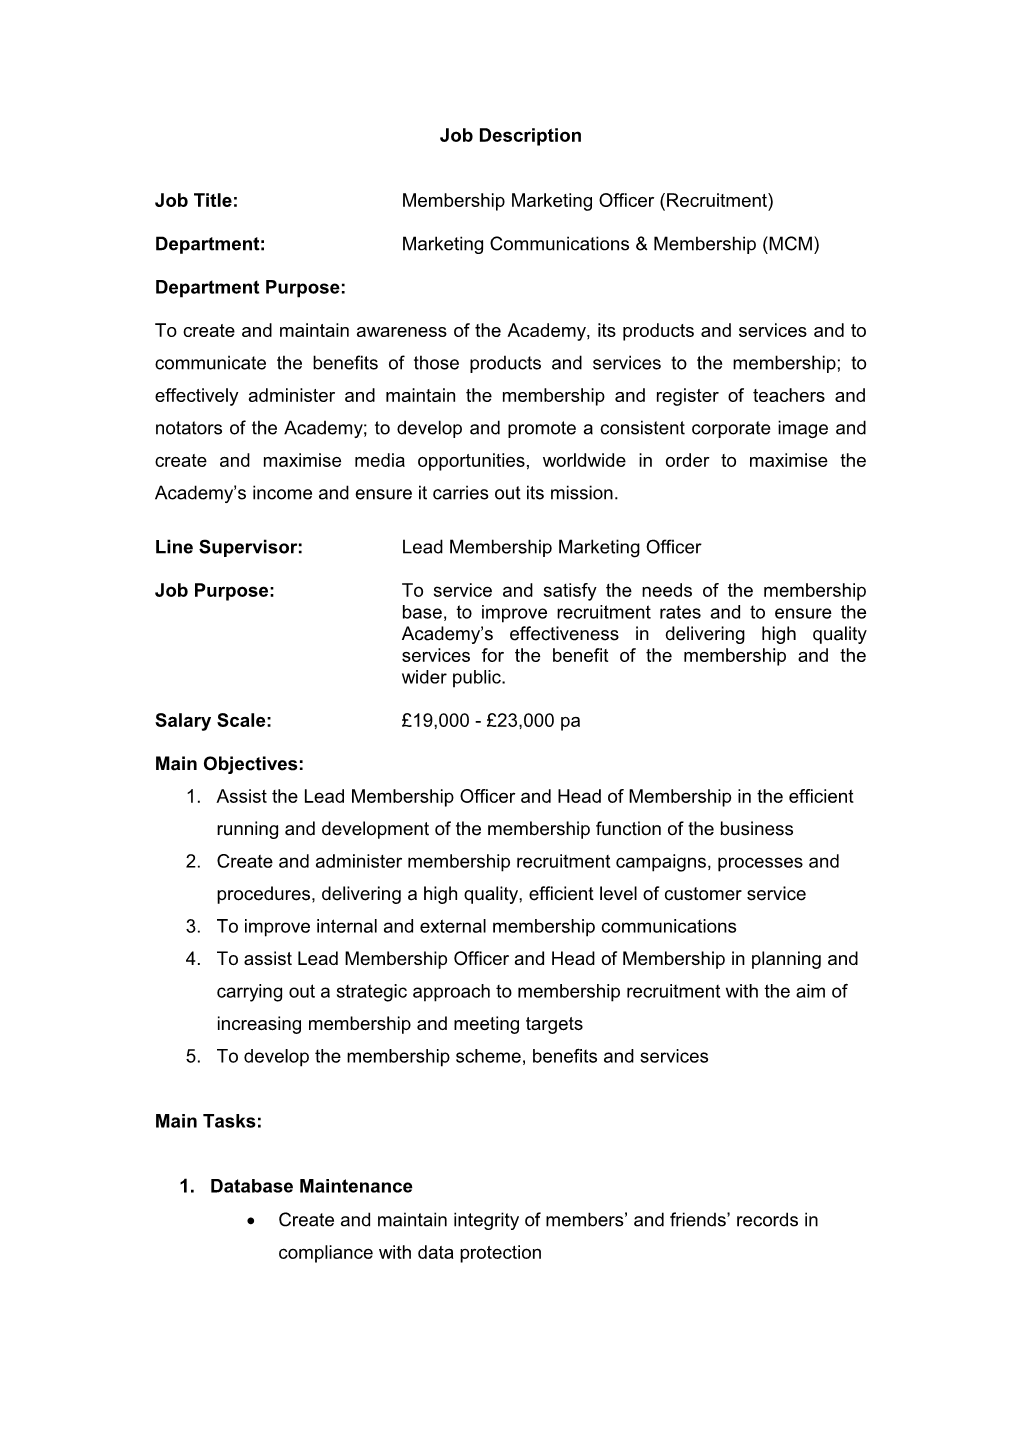 Job Title:Membership Marketing Officer(Recruitment)